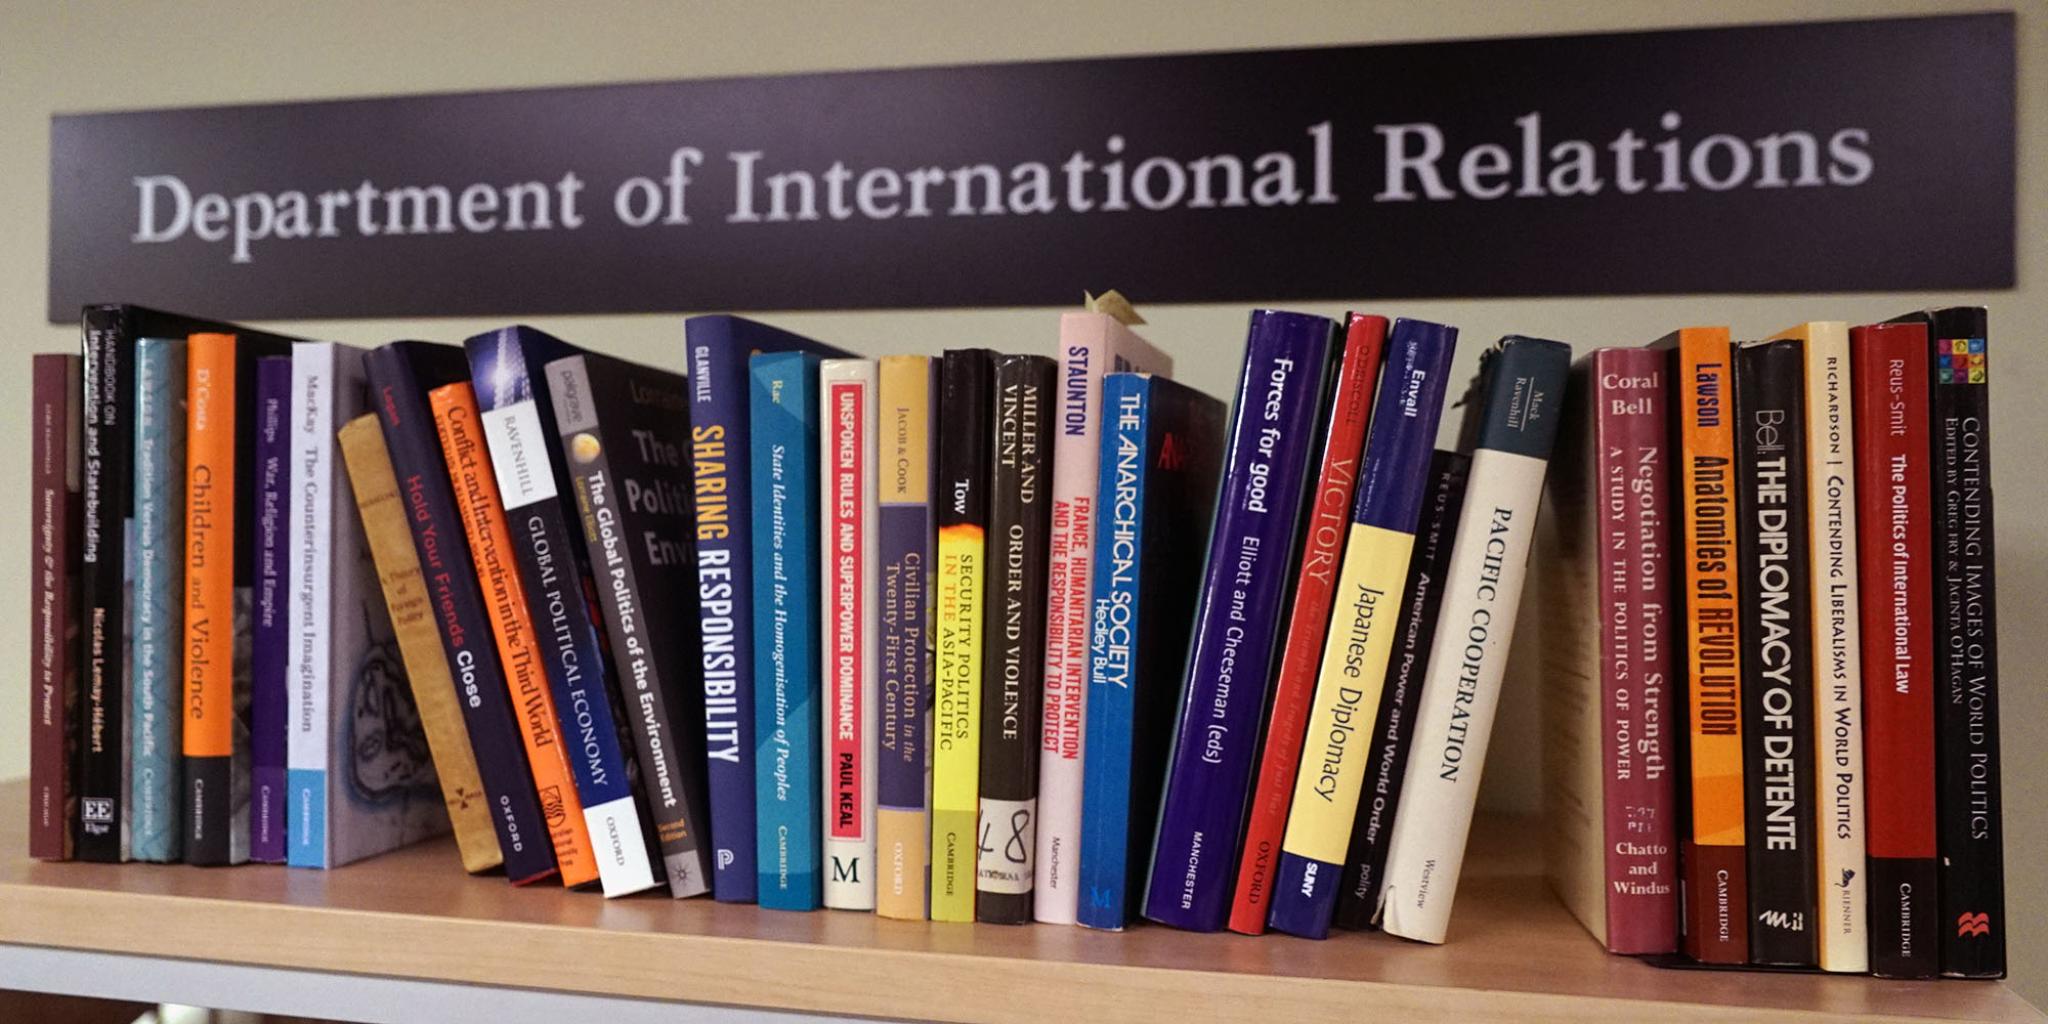 ANU Dept of IR books on shelf. Photo credit: Olivia Wenholz